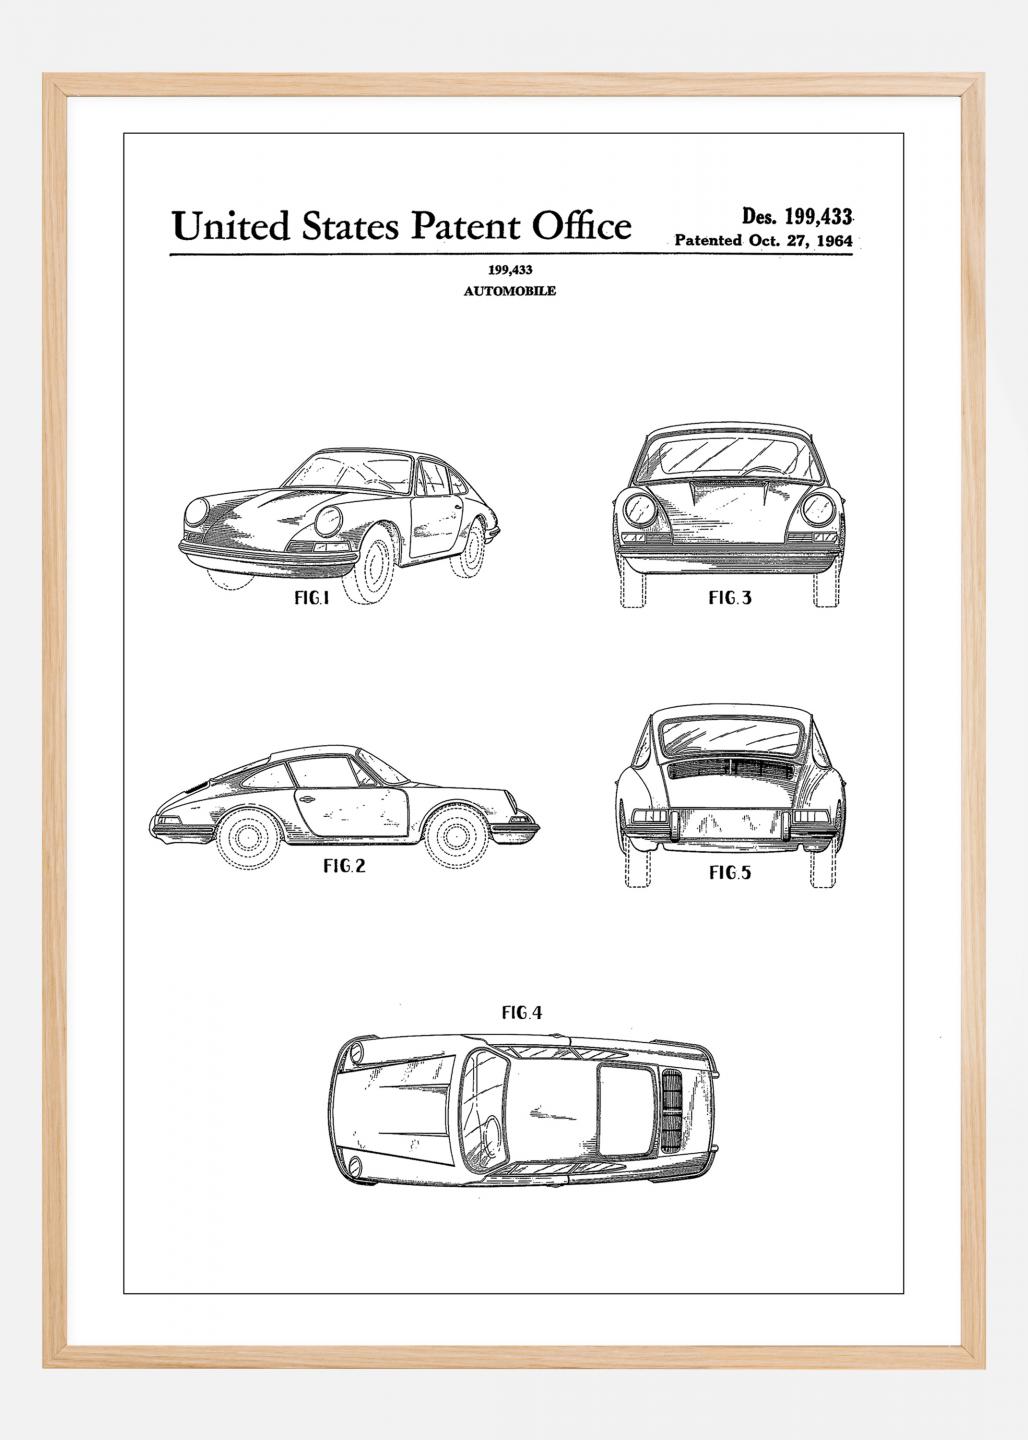 Køb Patent Print - Porsche 911 Carrera White Plakat her - BGA.DK